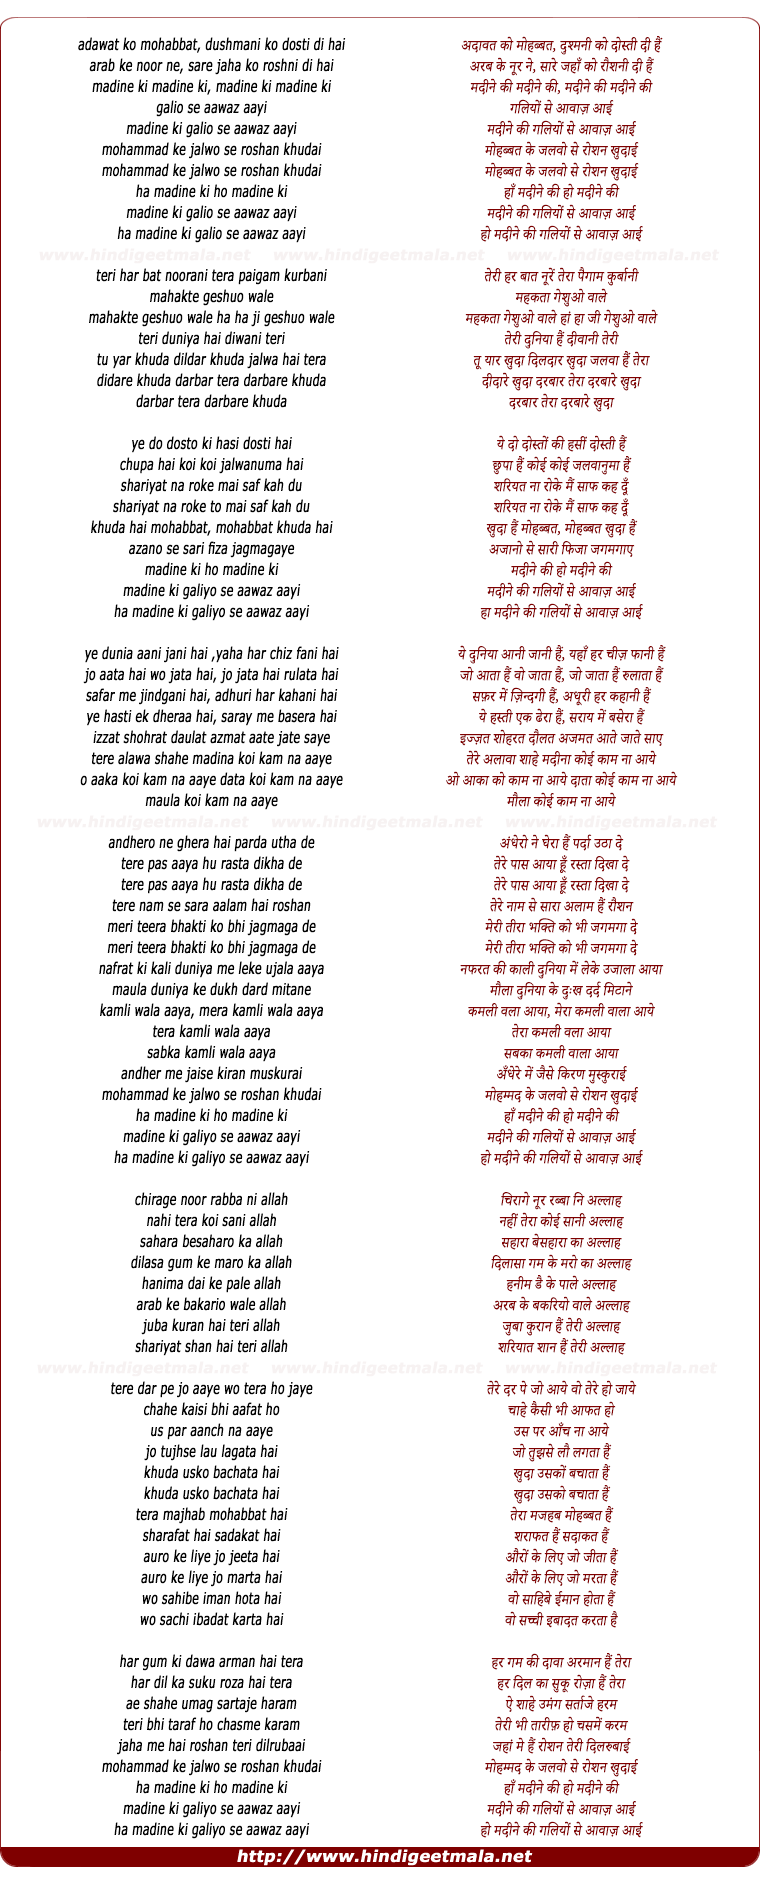 lyrics of song Madine Ki Galiyon Se Aawaz Aayi, Mohmmed Ke Jalwo Se Roshan Khudai